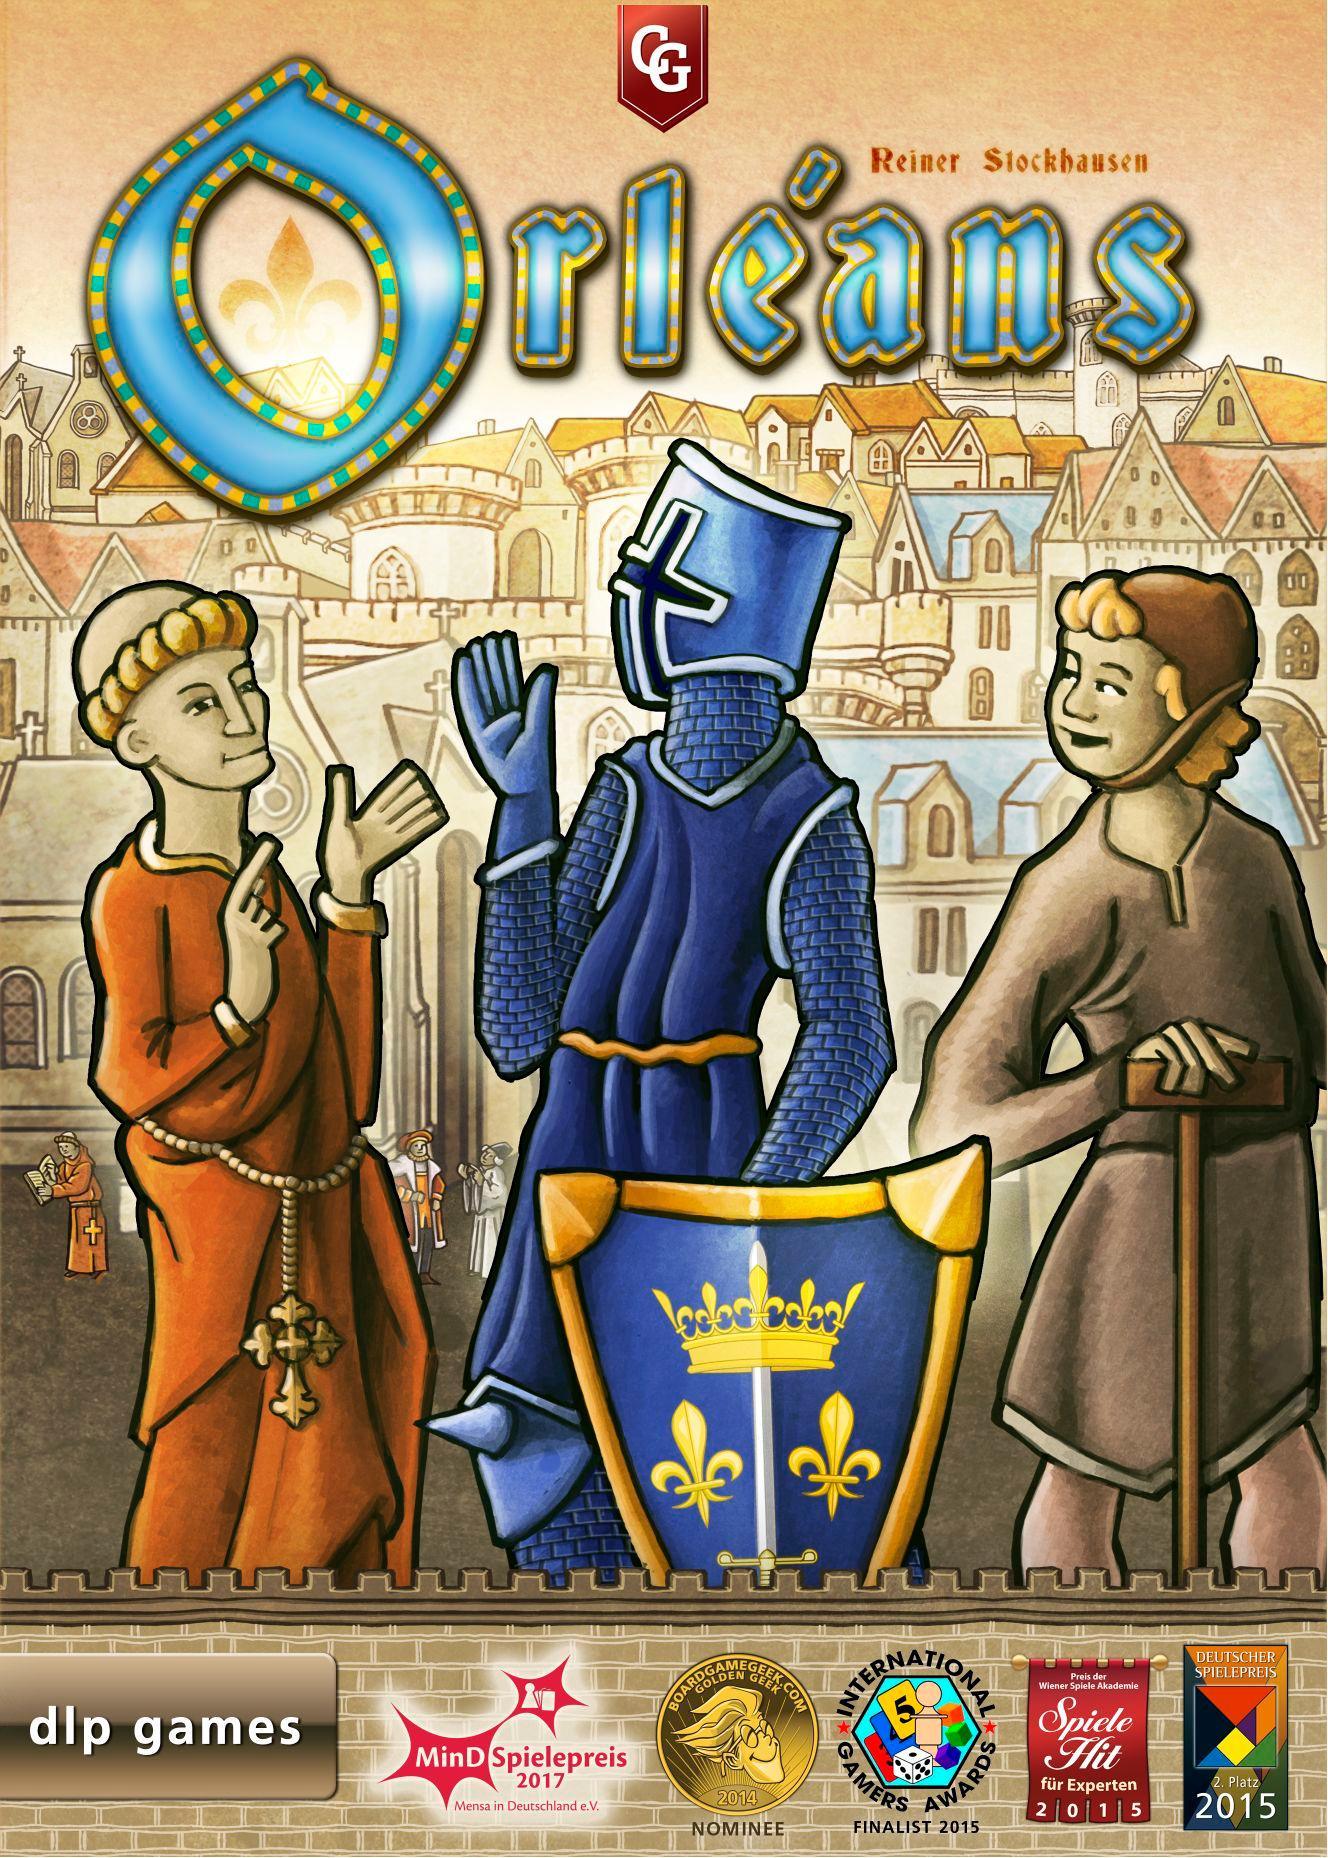 Orléans - Gaming Library